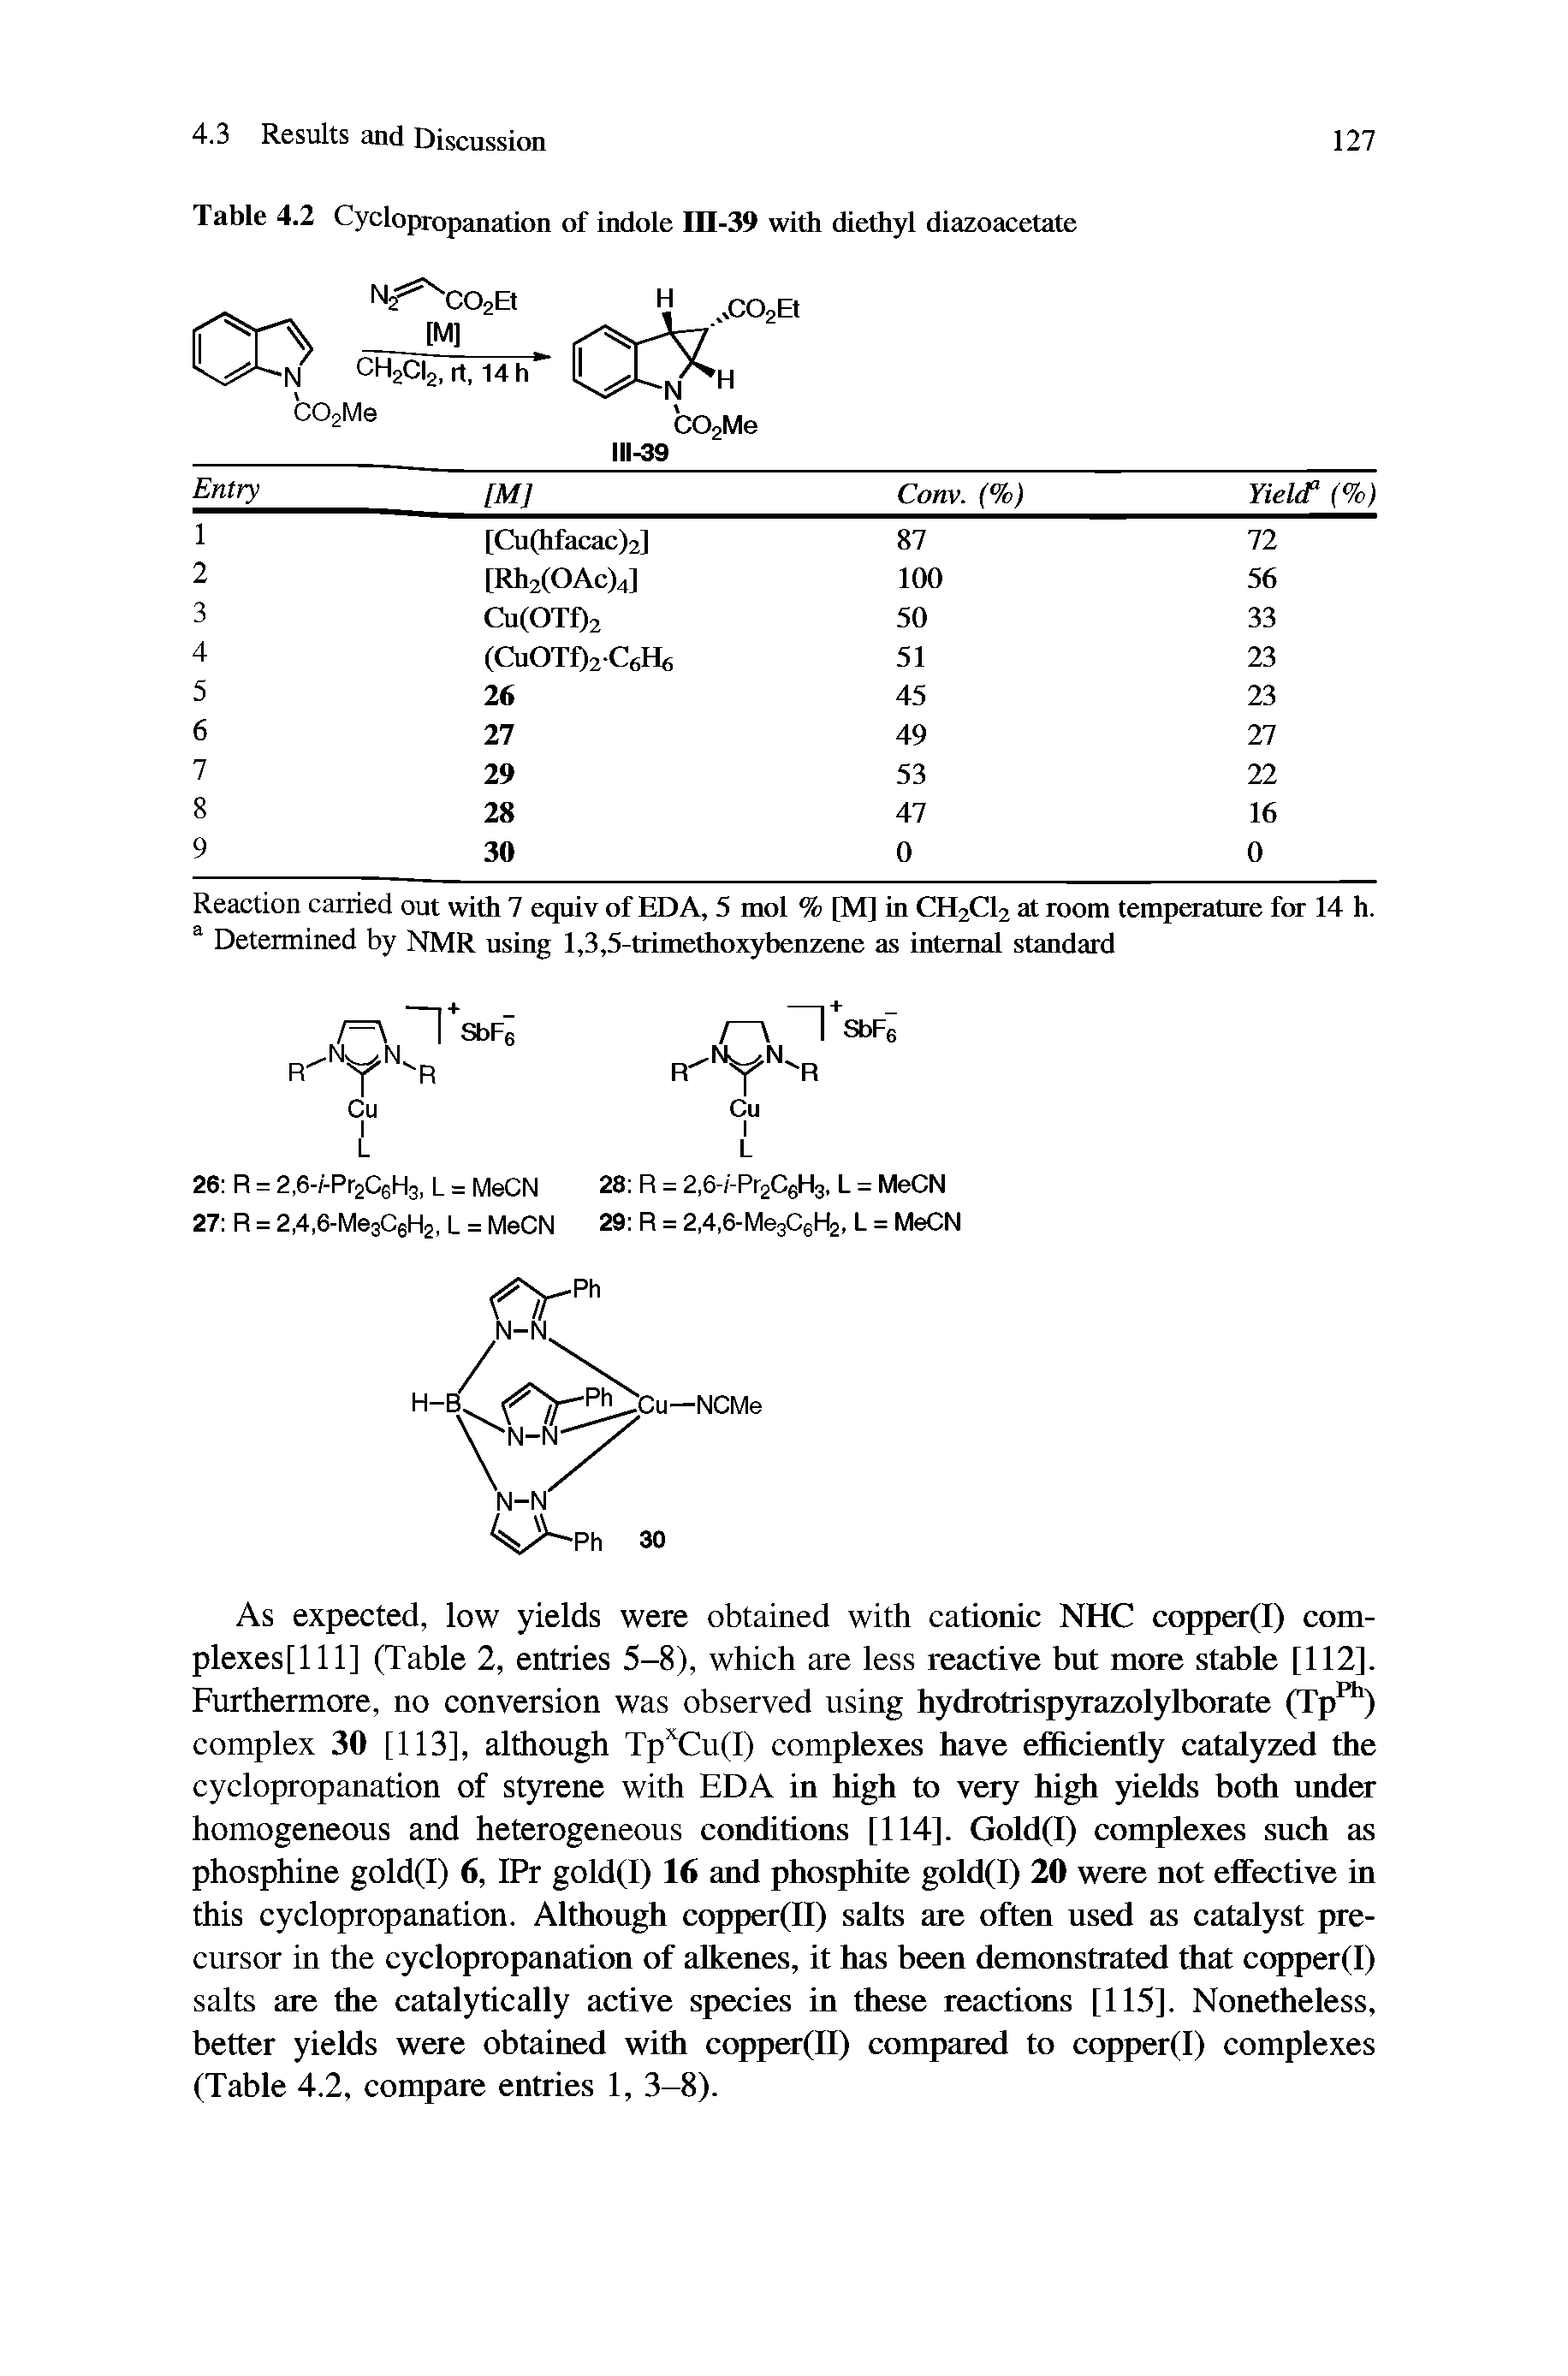 Table 4.2 Cyclojaopanation of indole III-39 with diethyl diazoacetate...